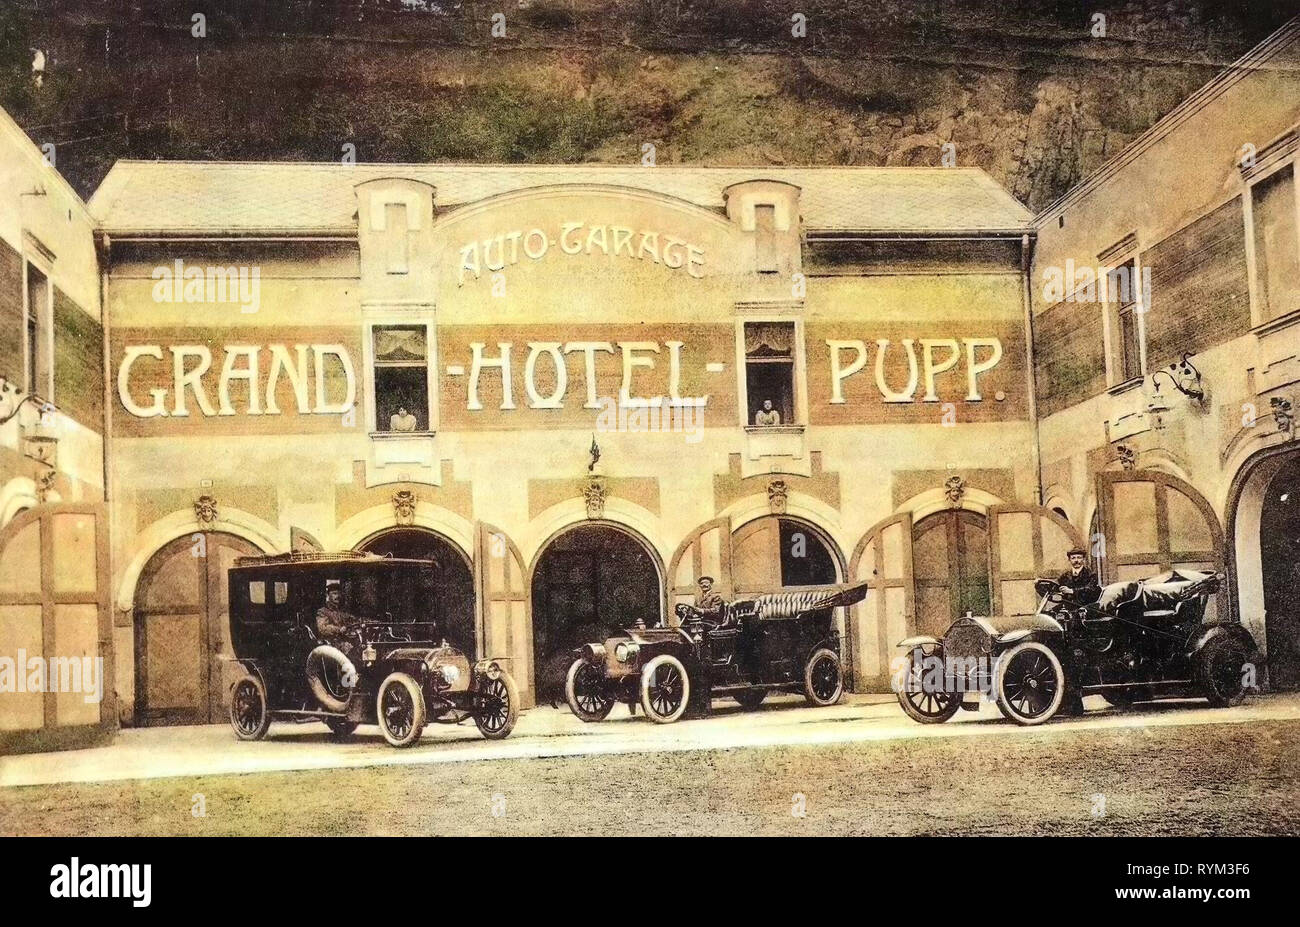 Grandhotel Pupp, Unidentified automobiles in the Czech Republic, Garages in the Czech Republic, 1908, Karlovy Vary Region, Marienbad, Grand Hotel Pupp, Autogarage Stock Photo